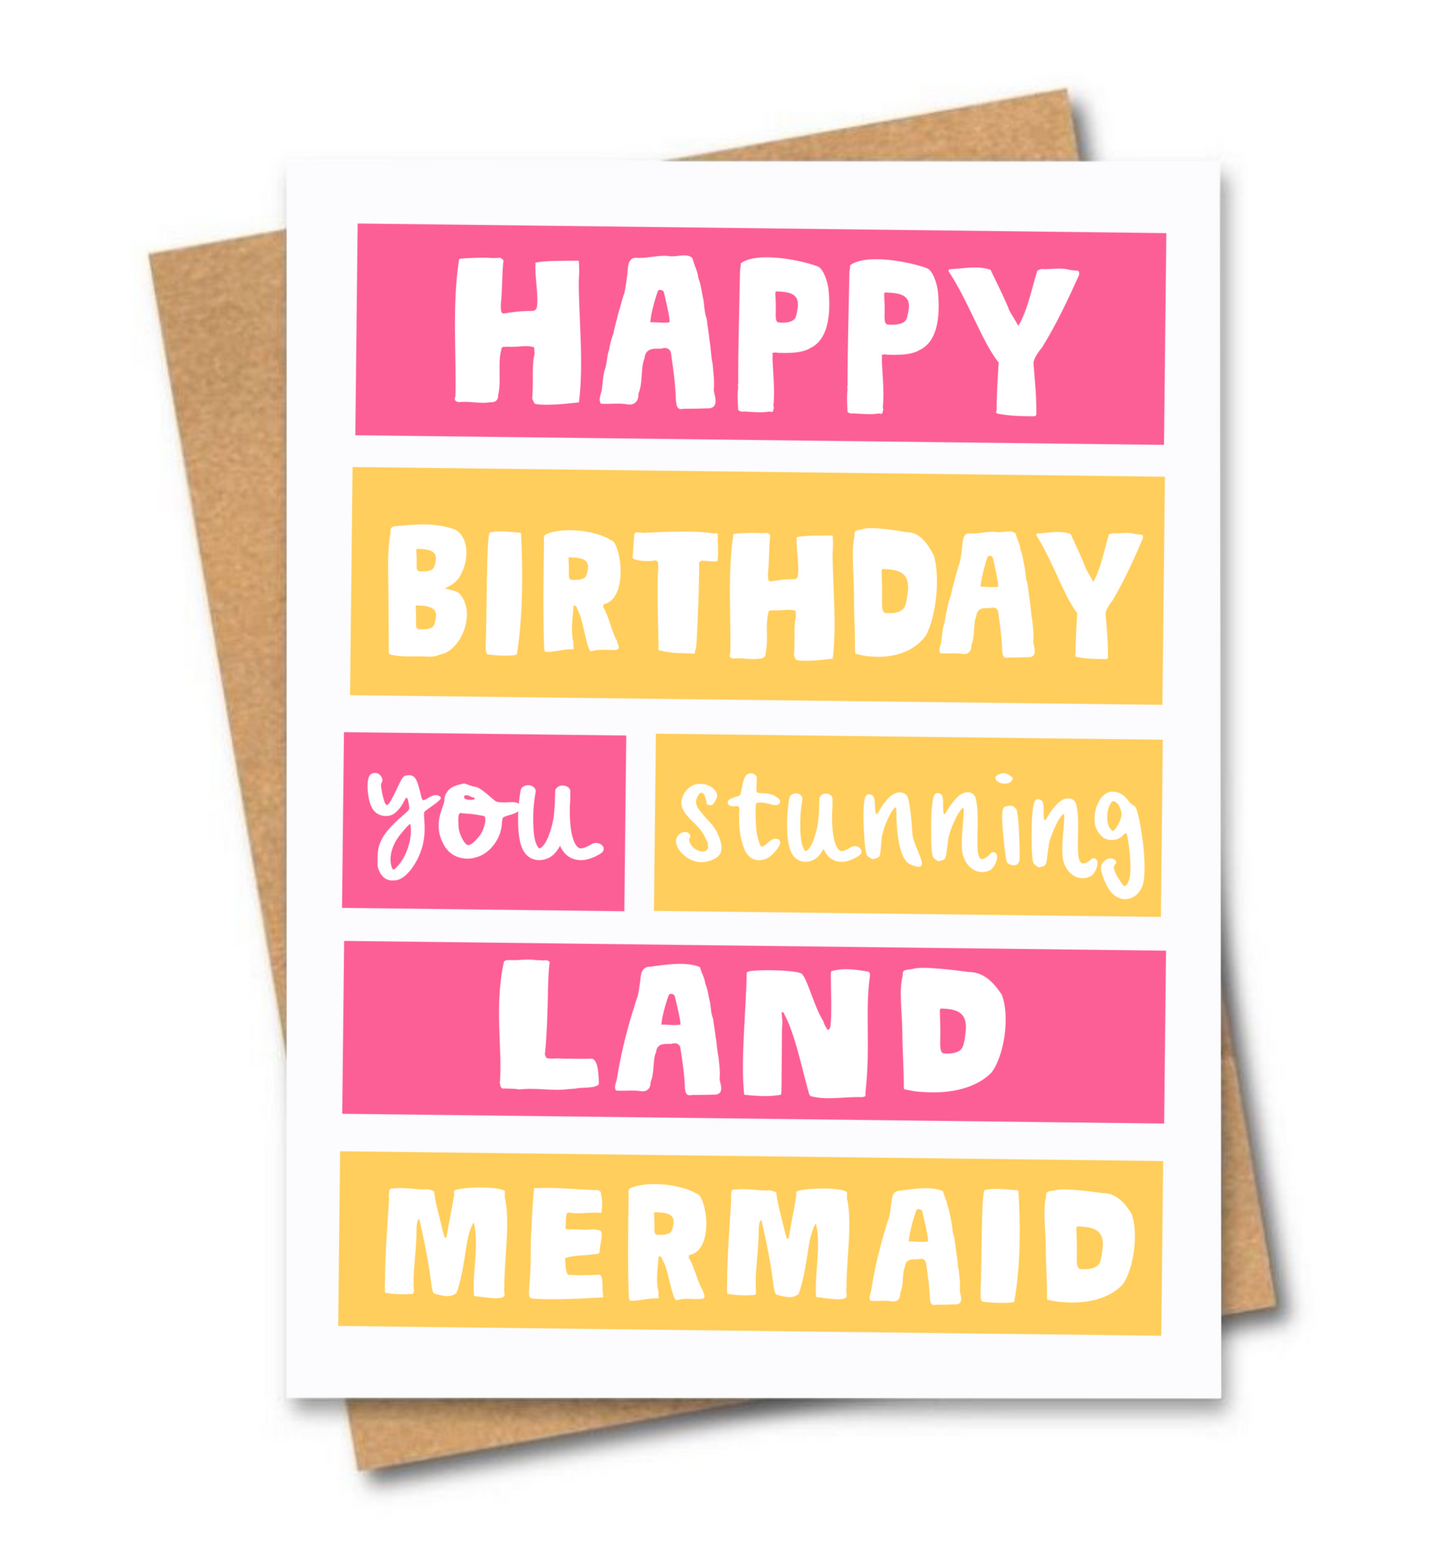 Cards - "Land Mermaid"